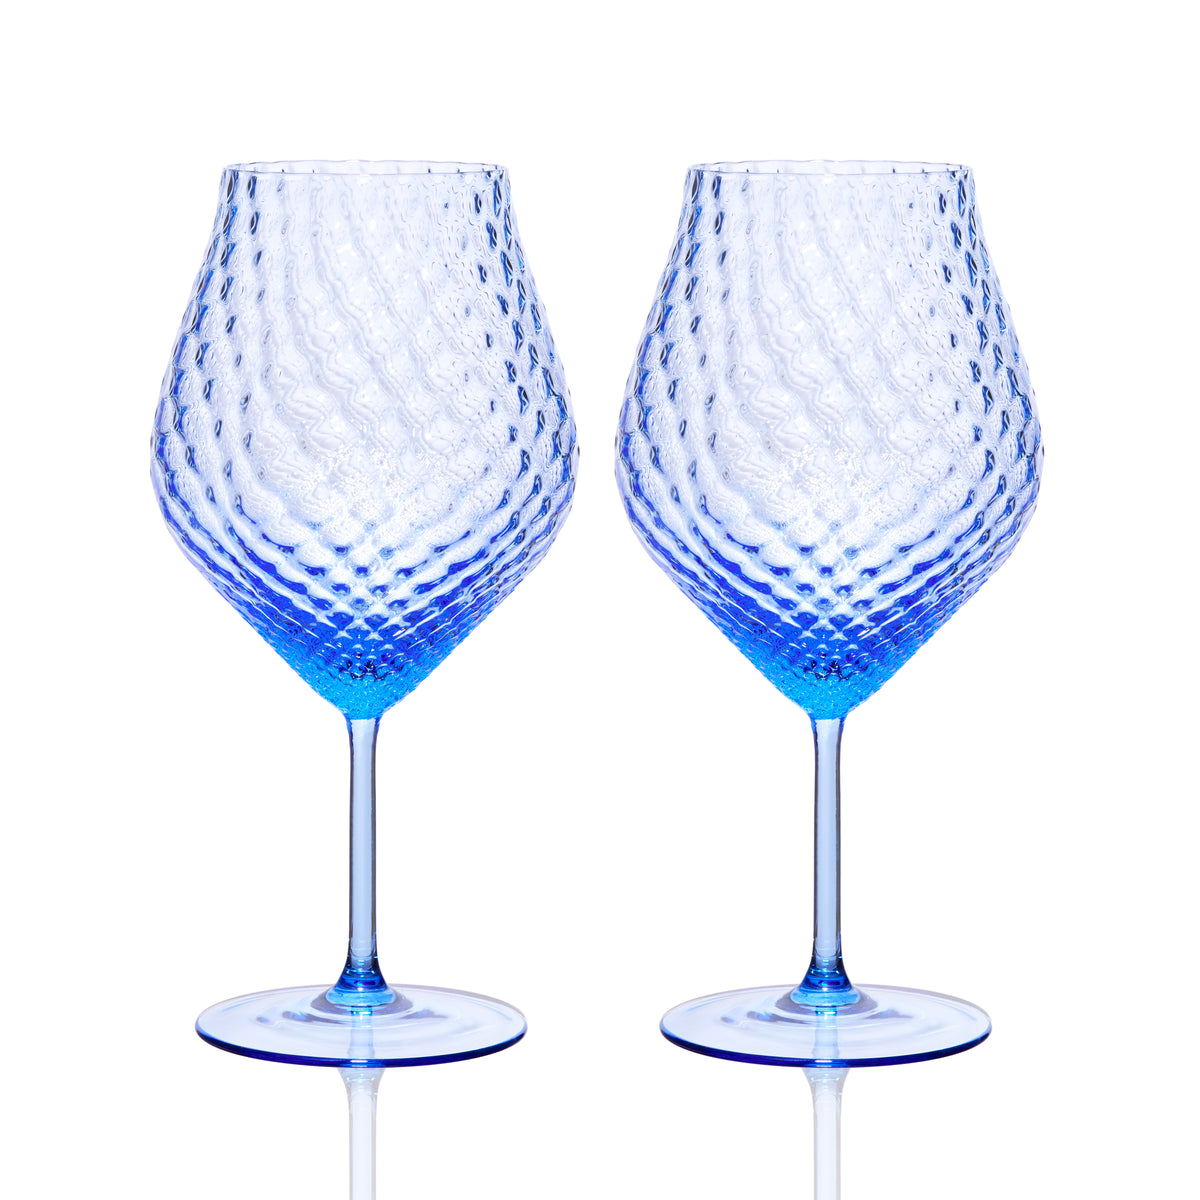 Phoebe cobalt blue crystal tulip universal wine glasses from Caskata.